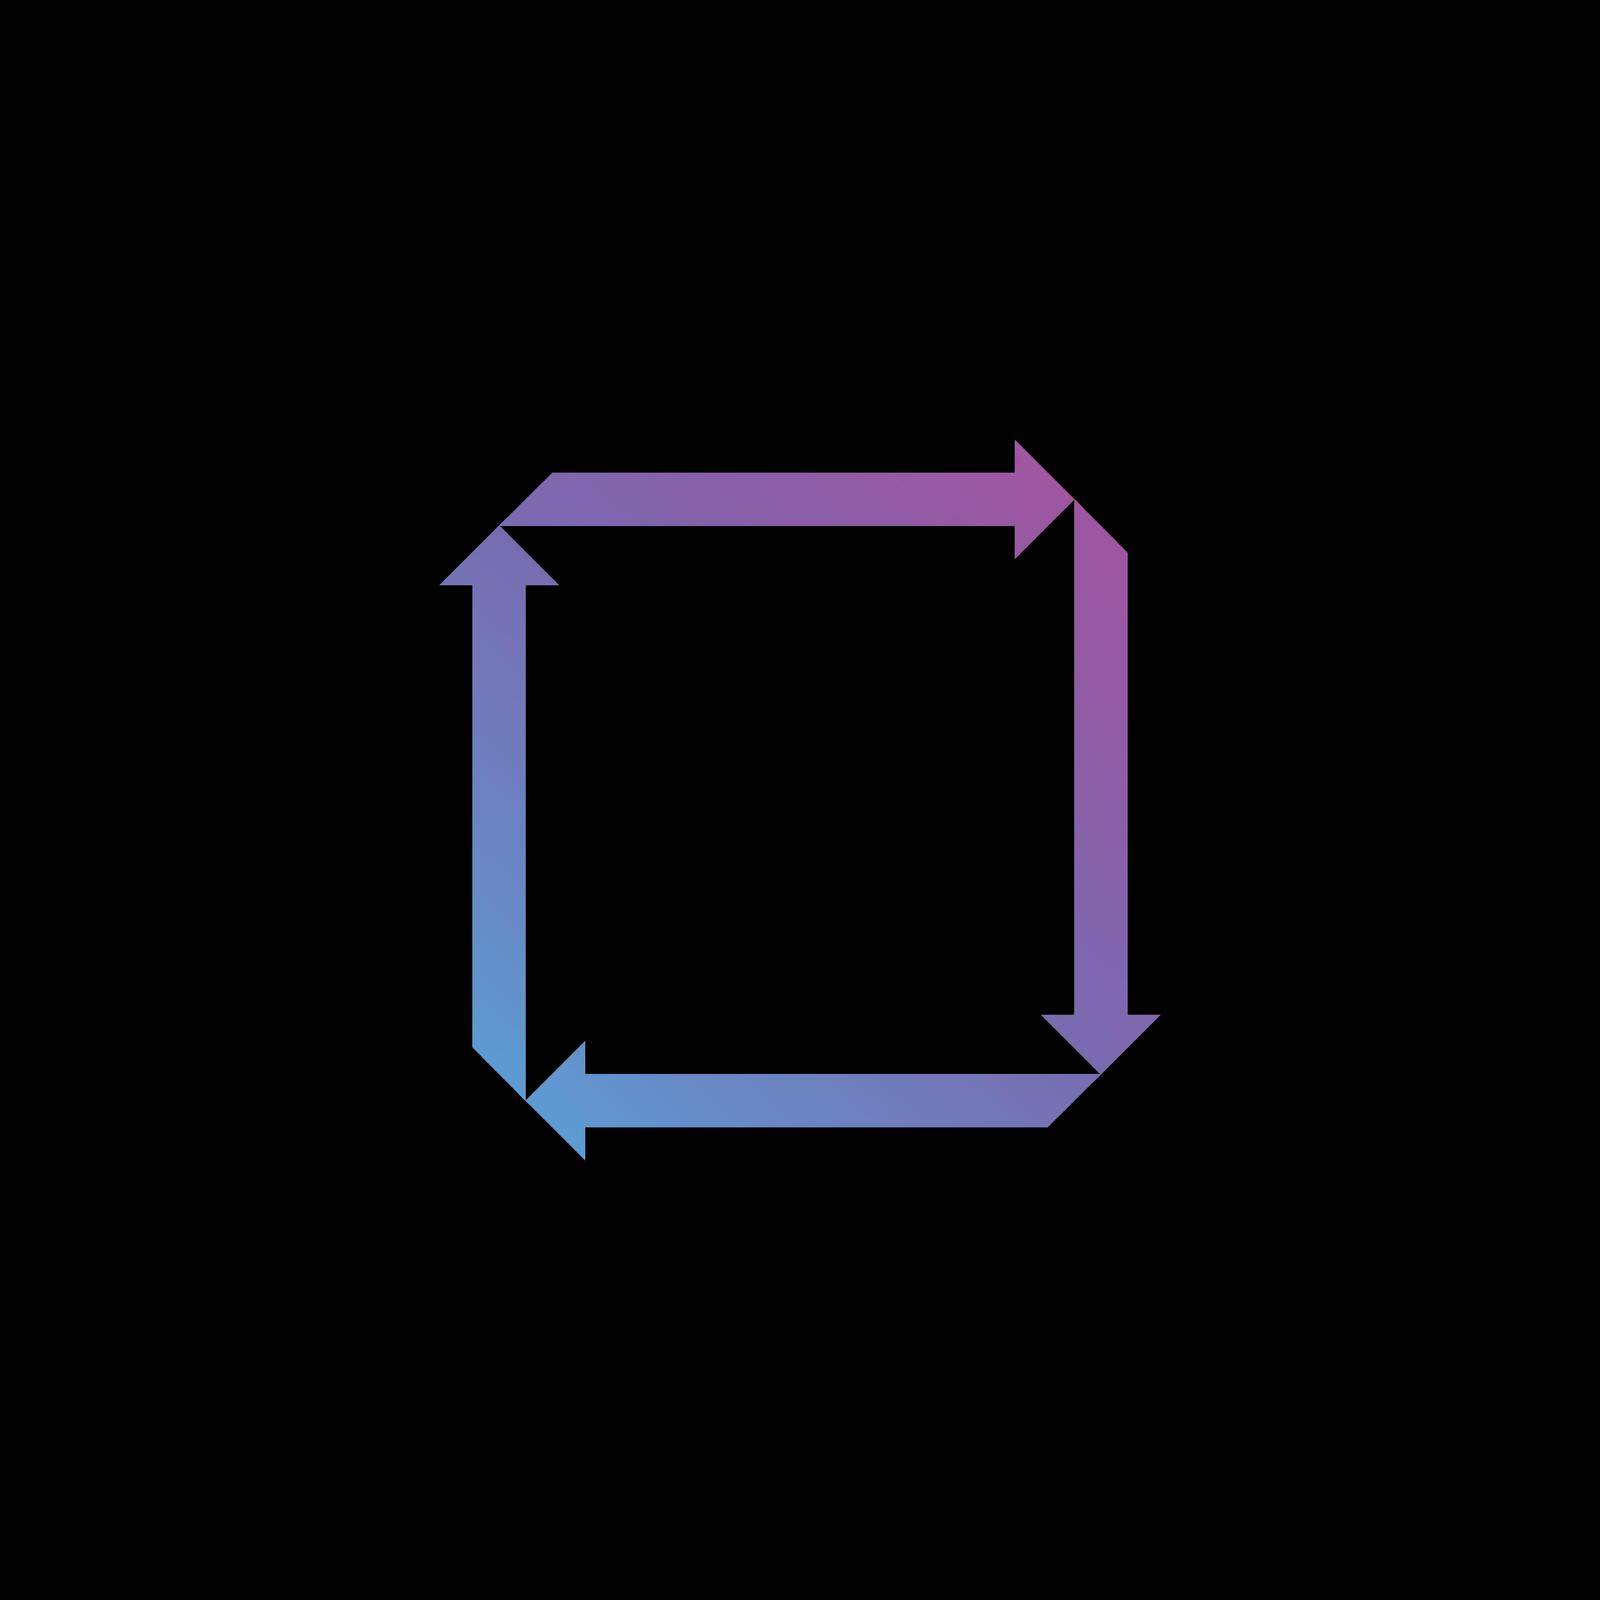 Creative Symmetrical arrows Logo Icon. Vector illustration isolated on black